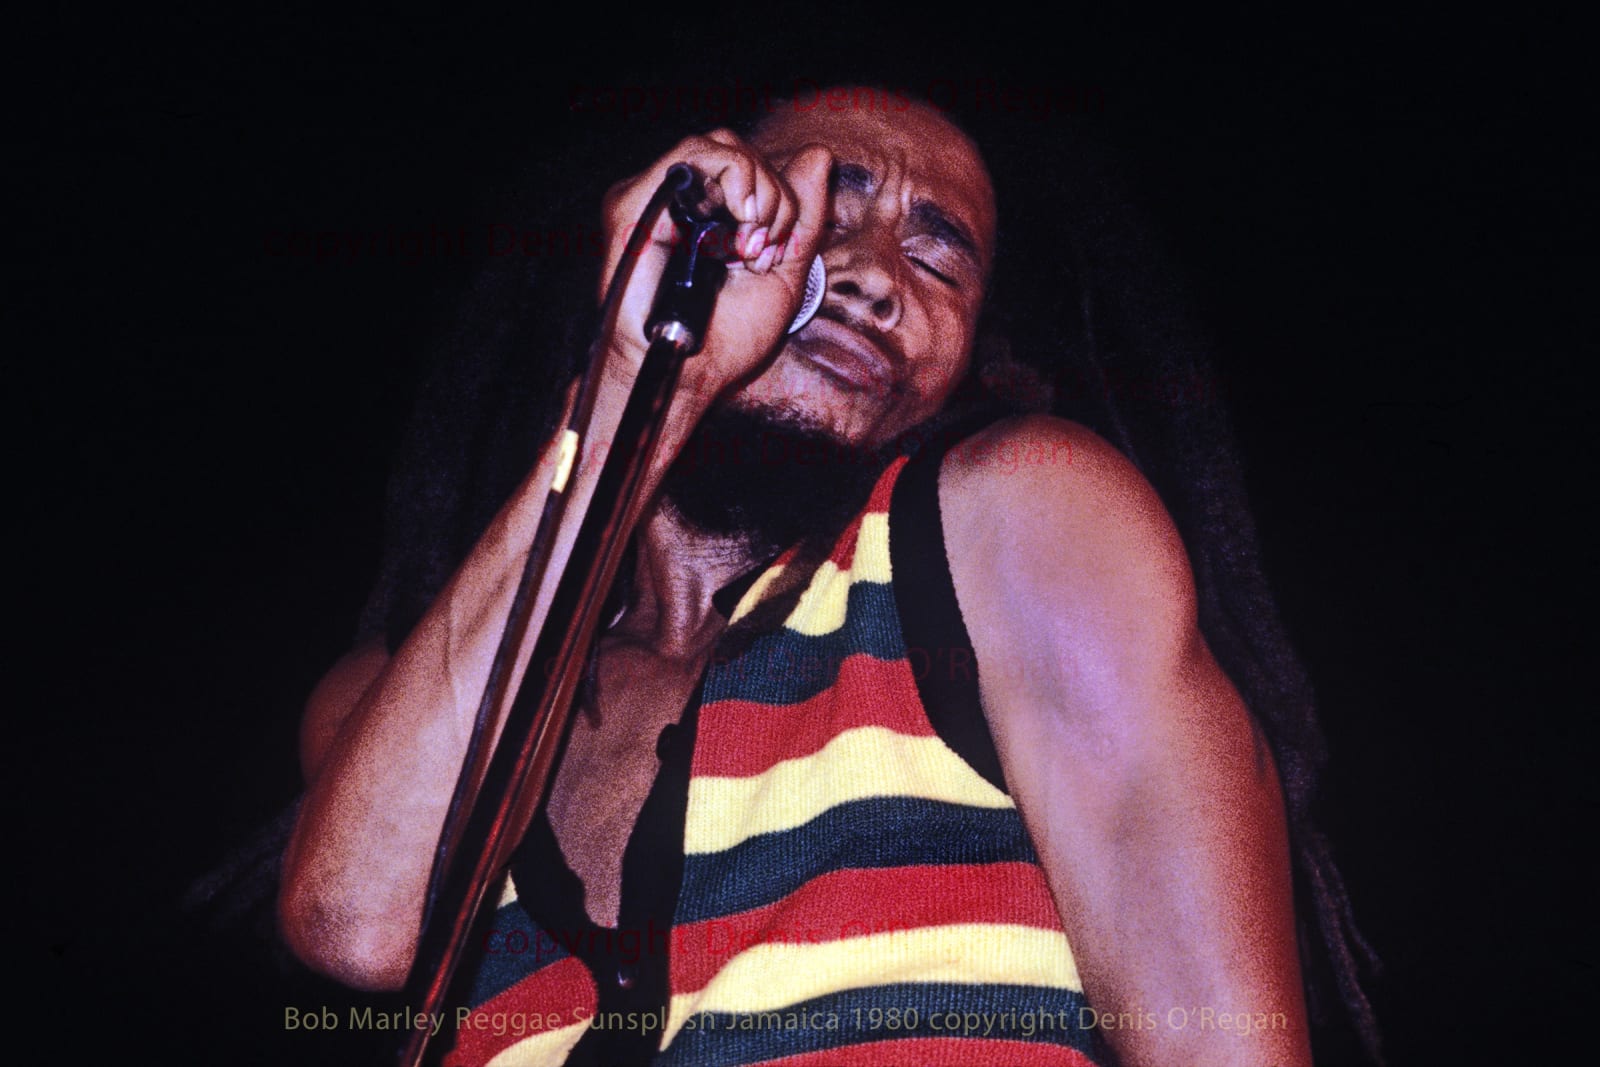 BOB MARLEY, Bob Marley Reggae Sunsplash, 1979